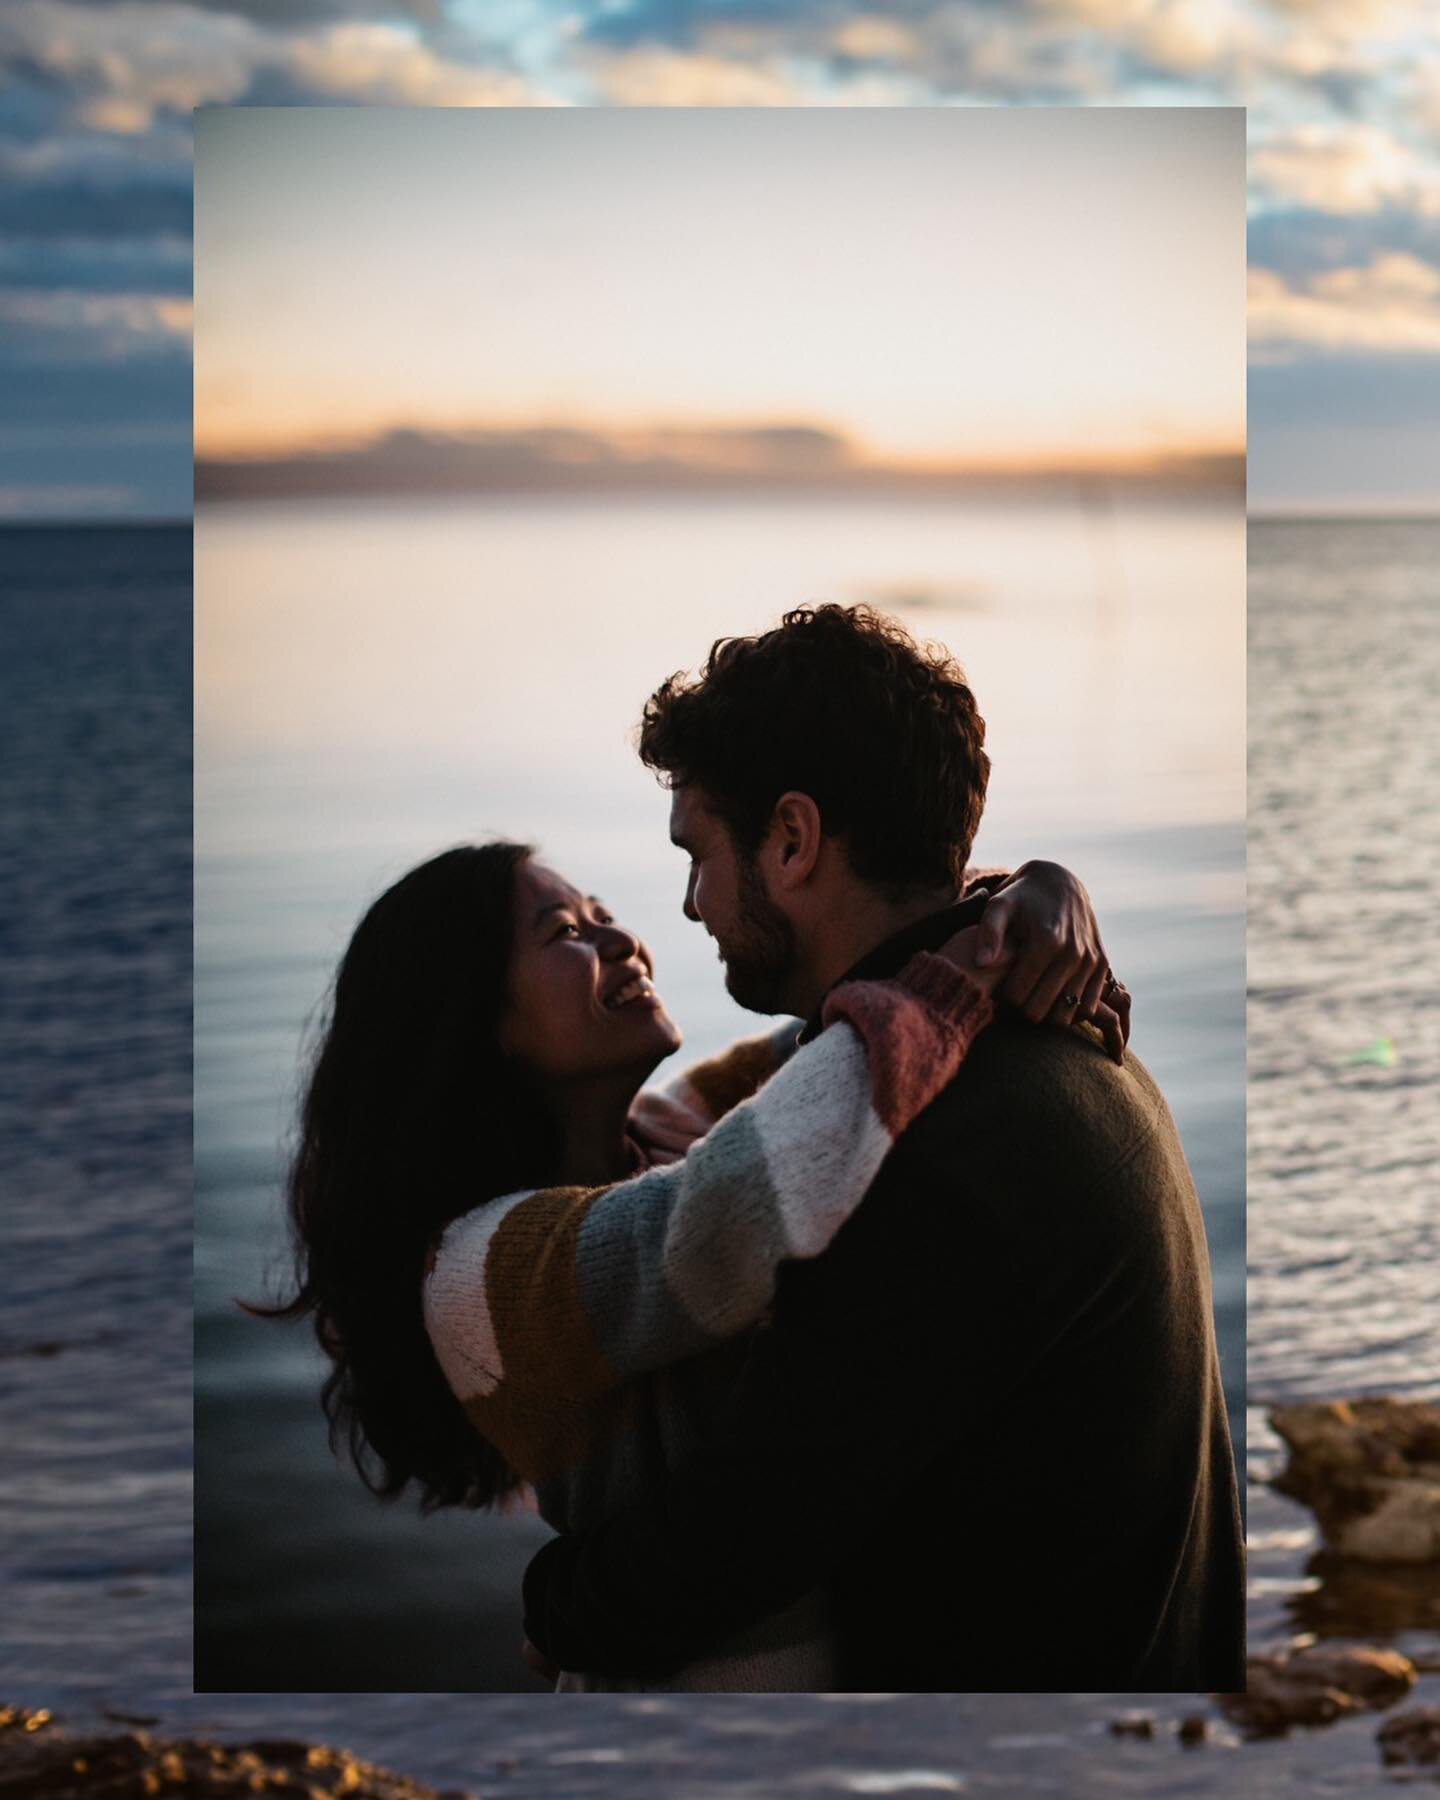 Tom and Petot&rsquo;s gorgeous engagement proposal at Mt Eliza Beach
.
.
.
.⠀
.⠀
.⠀
.⠀
#loveislove#chasinglight#makemoments#lookslikefilm#theknot#loverly#kinfolk#icatching#ig_myshot#ivorytribe#hellomay#nouba2#idoidogippsland#elopingaustralia#eloping.